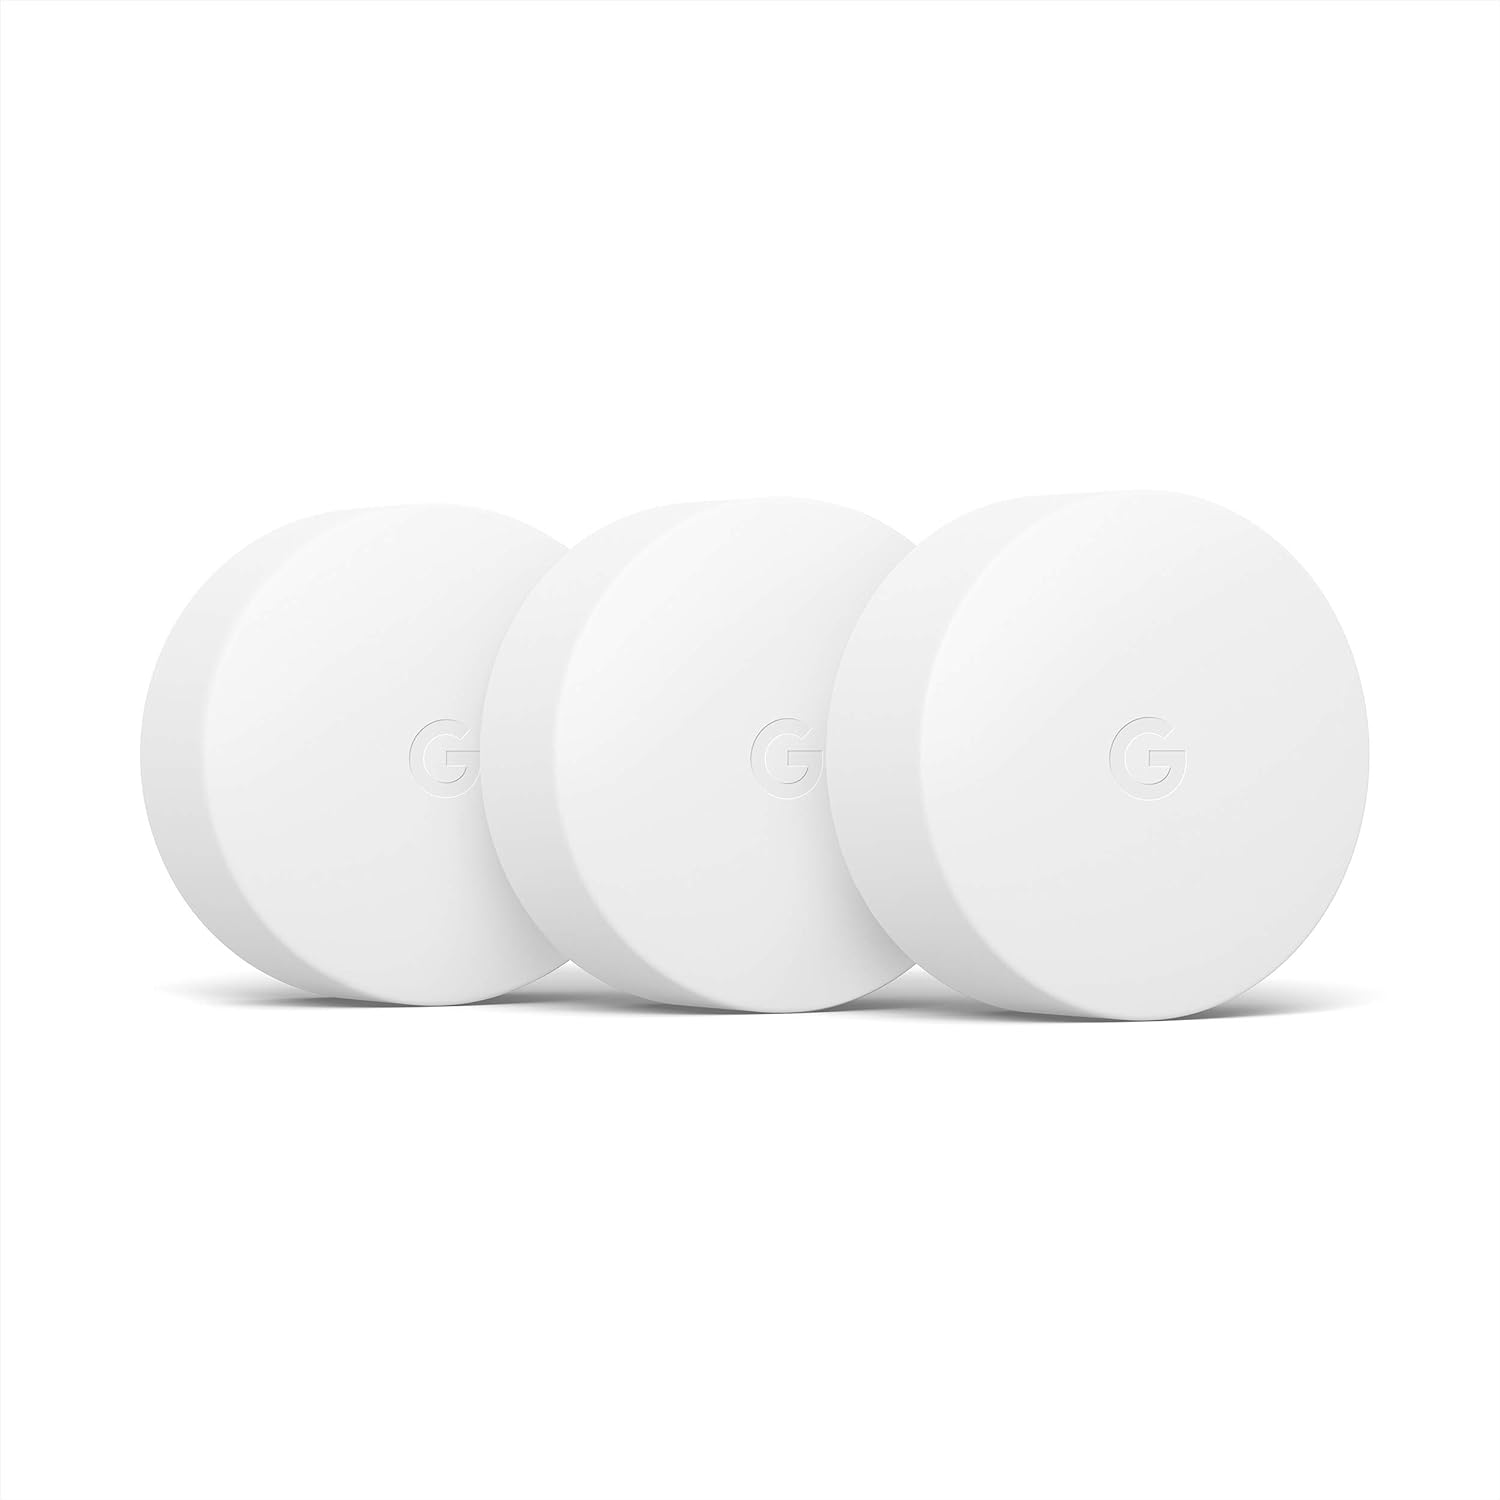 Google Nest Temperature Sensor 3 Count Pack Review